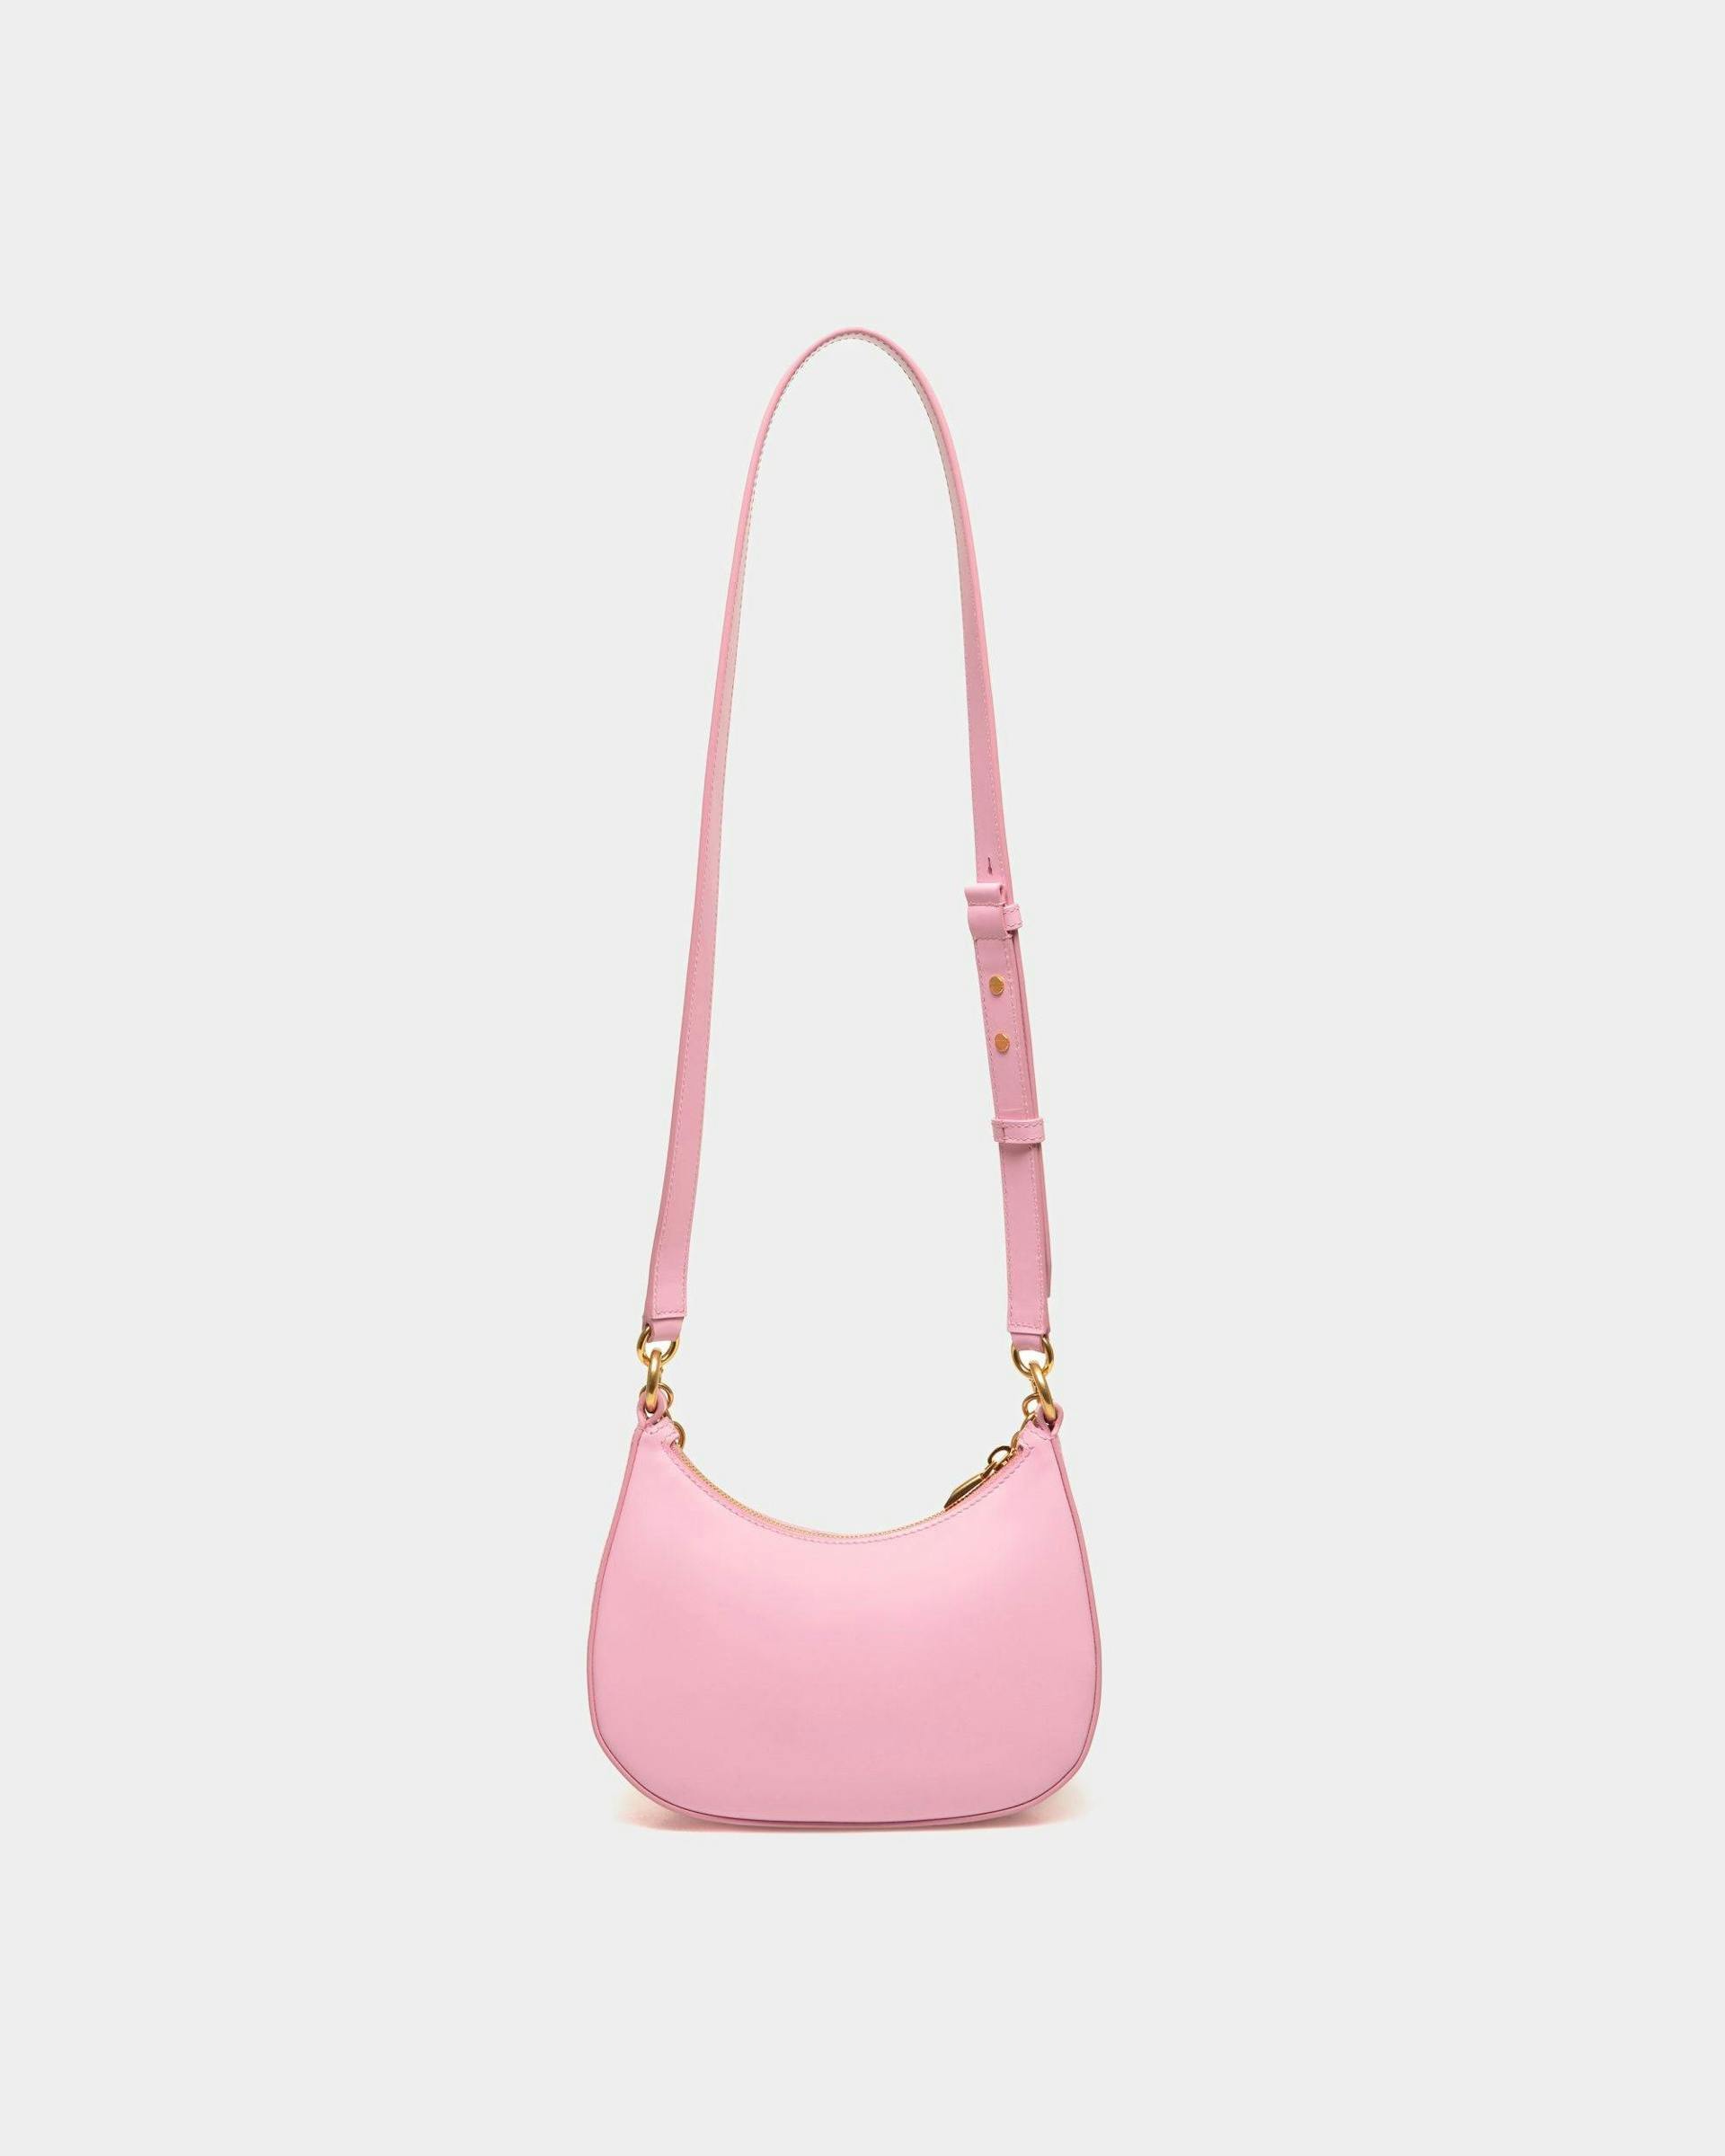 Women's Emblem Mini Crossbody Bag in Pink Patent Leather | Bally | Still Life Back